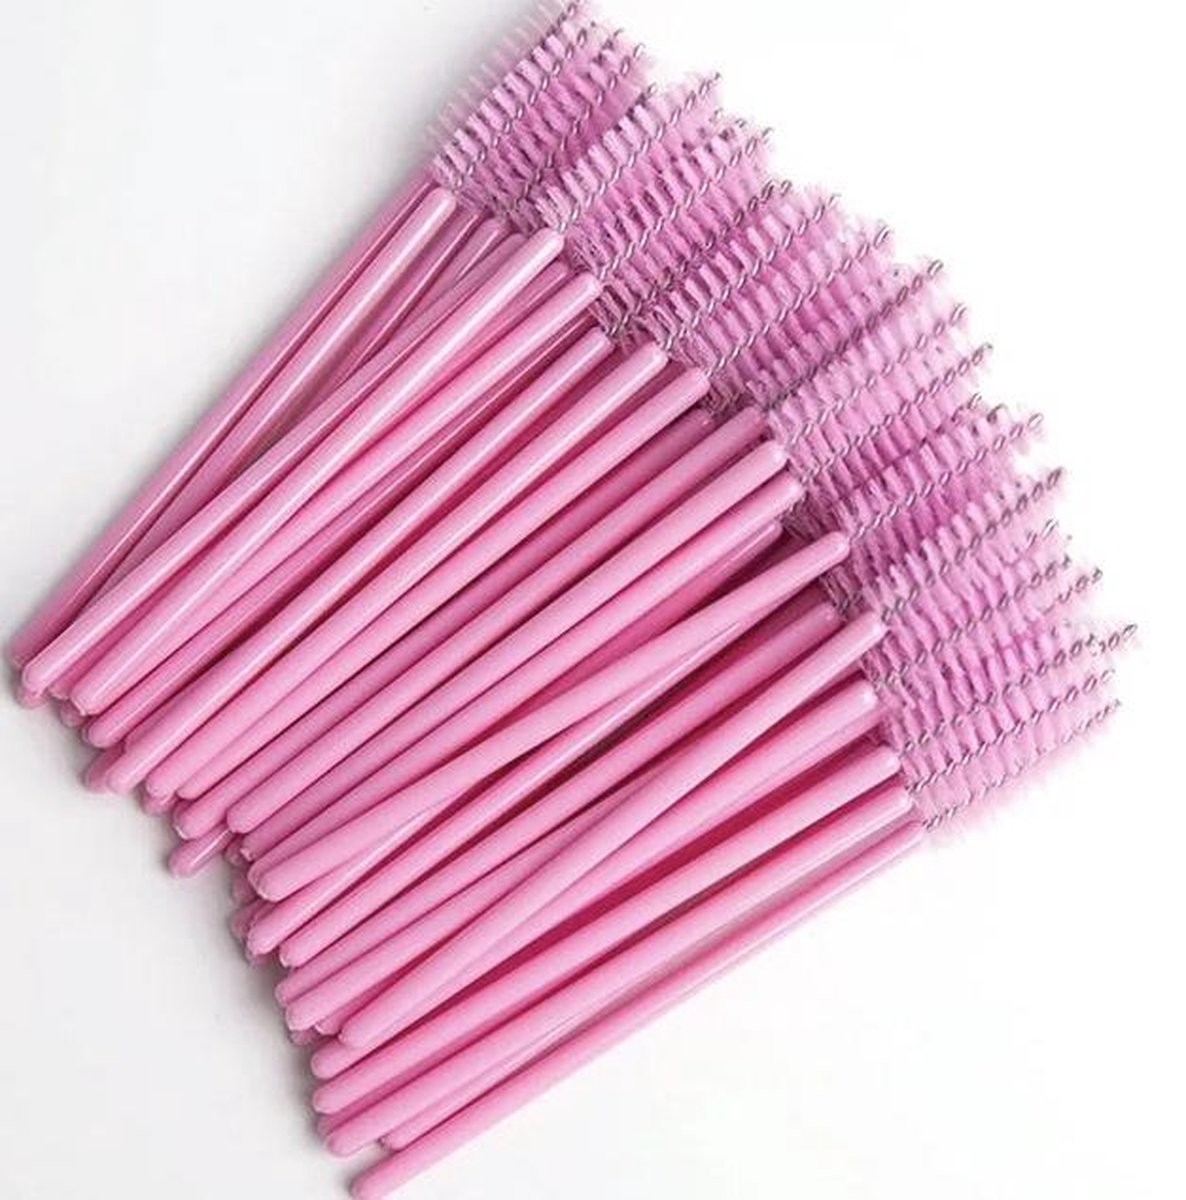 Weg werp wimper & mascara borsteltjes roze 25pcs / Eyelash brush pink